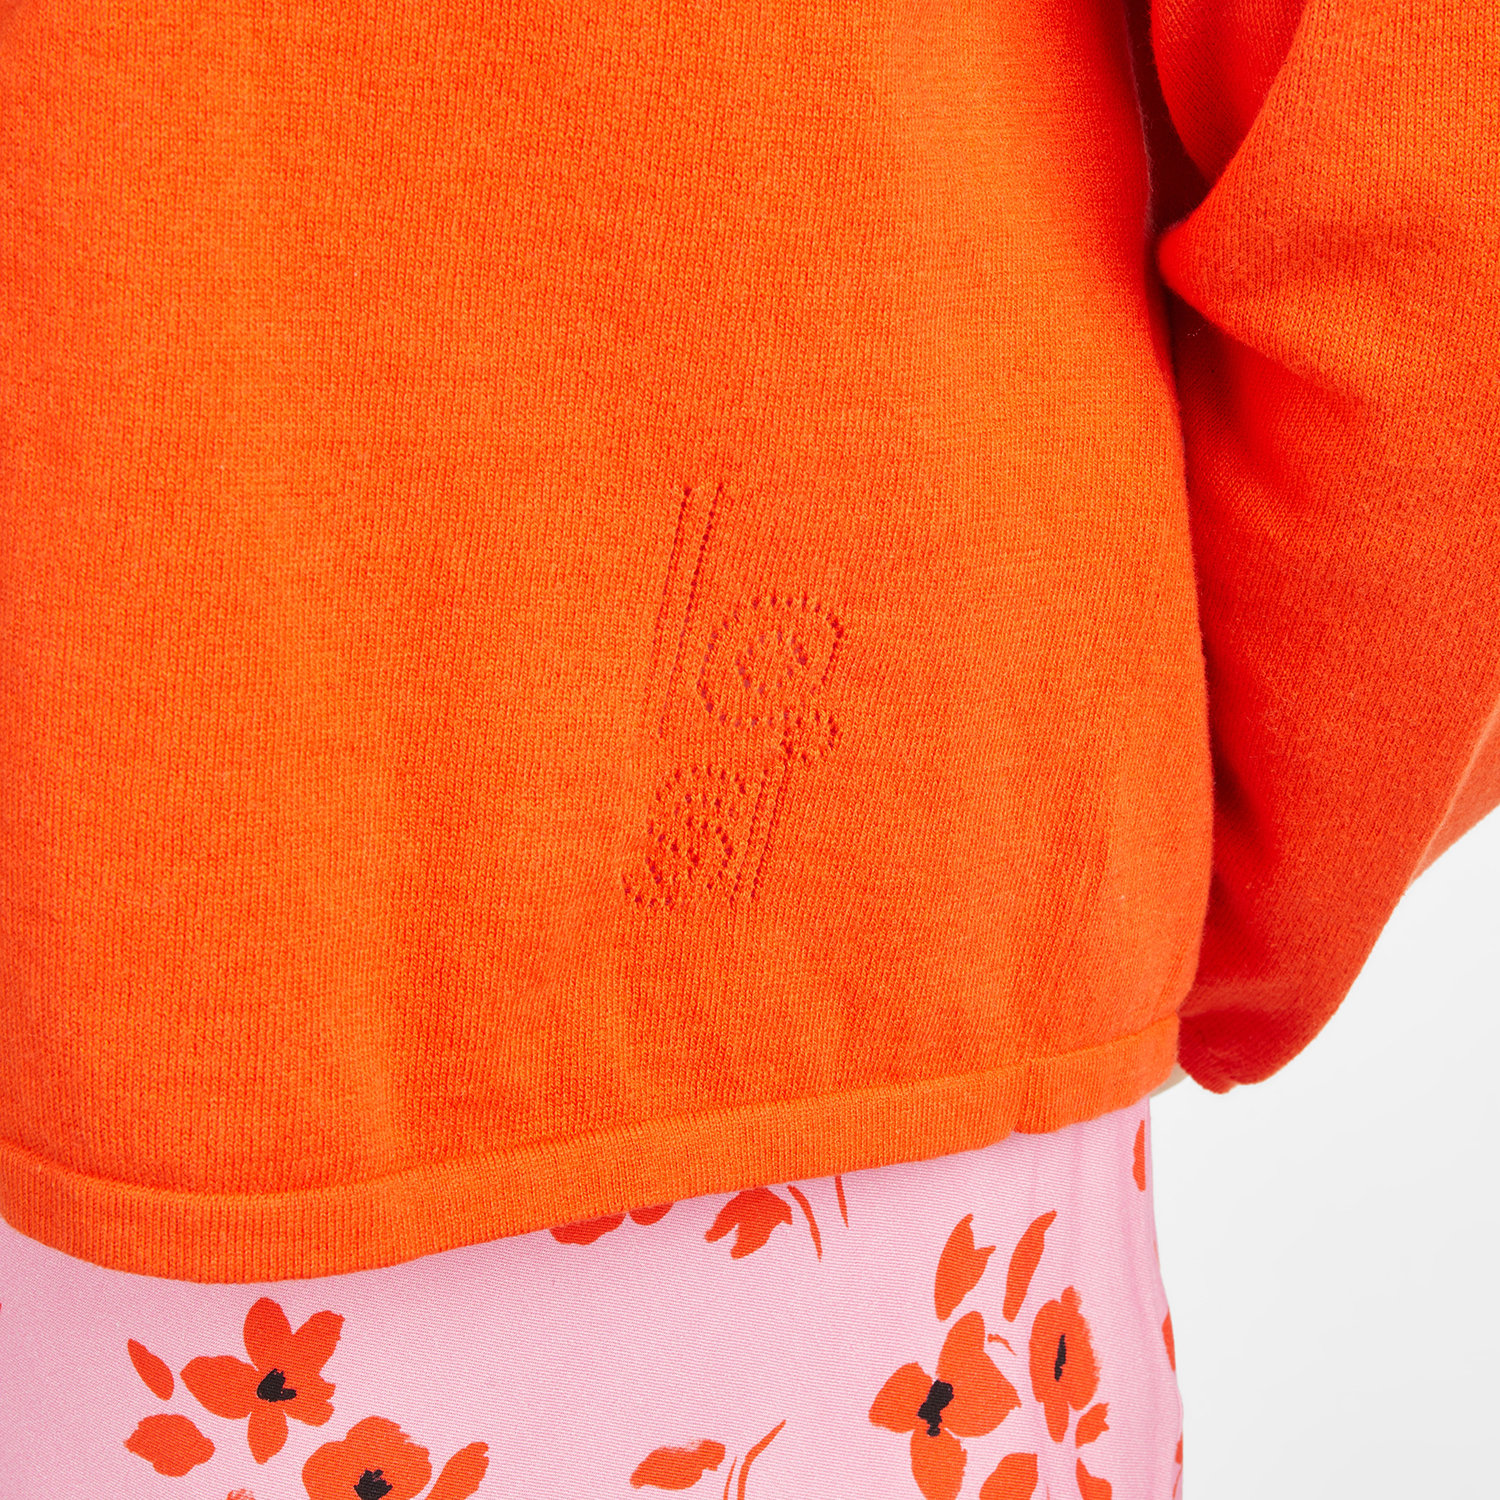 LovelySisters-Chelsea_LS-rot orange- Cardigan-Detail am Rücken-Logoprägung